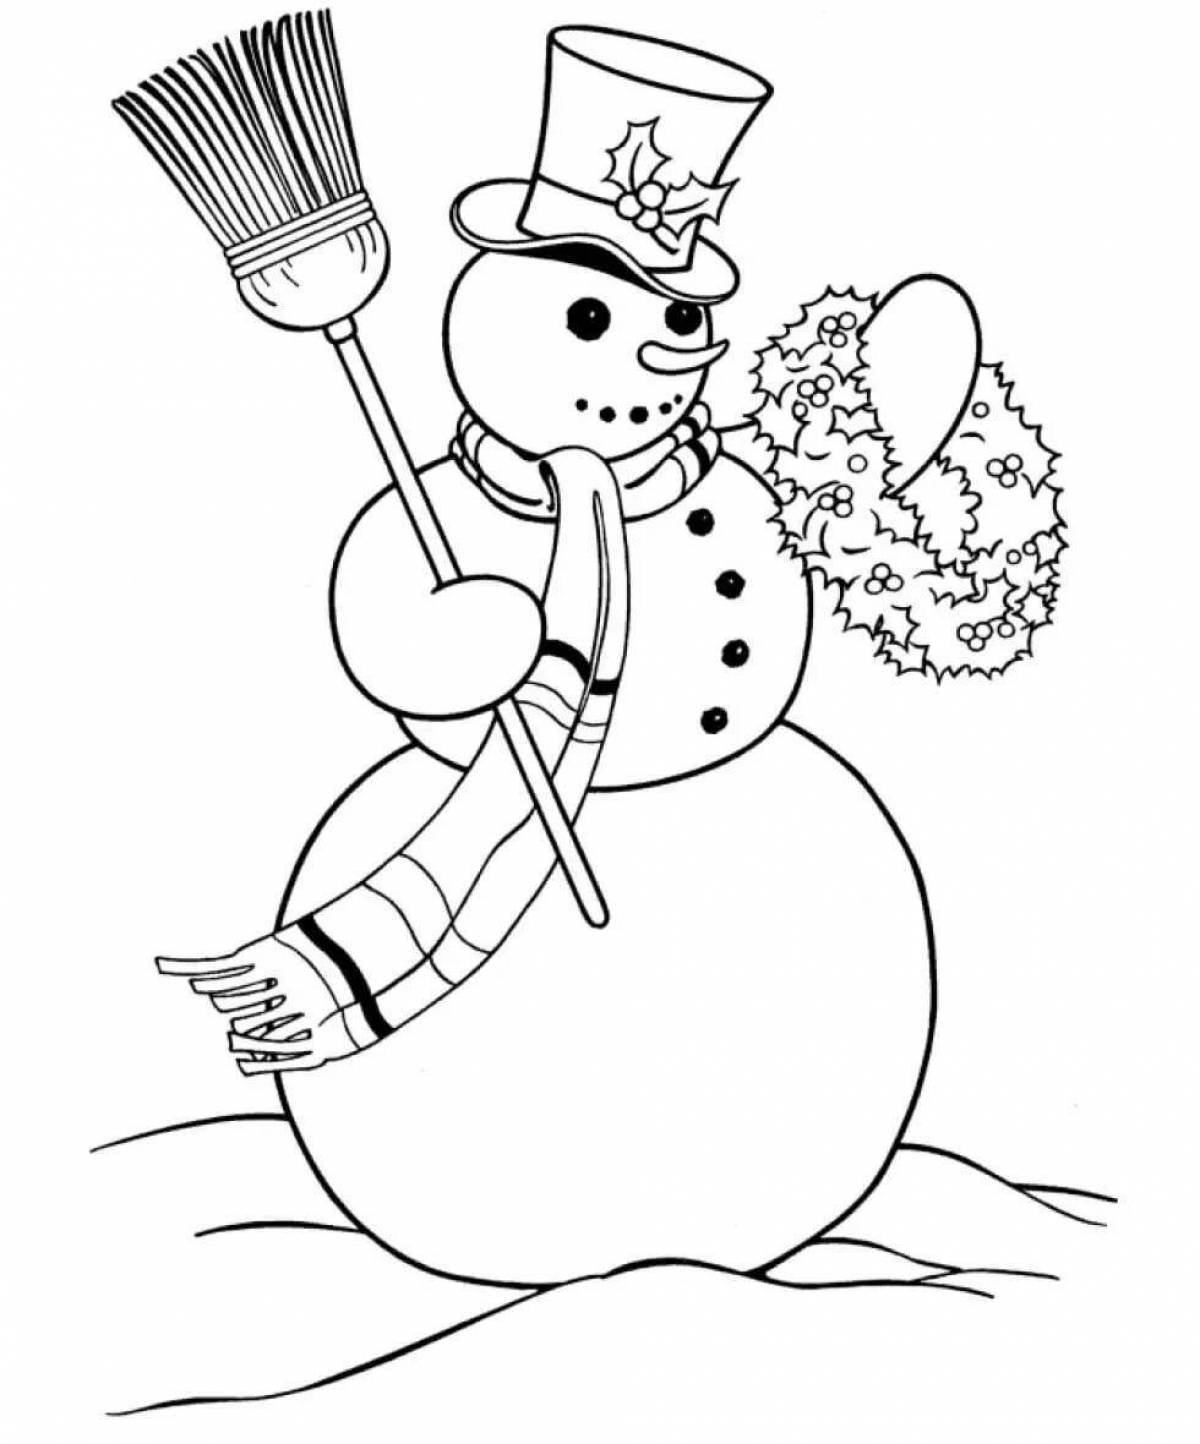 Big snowman holiday coloring page